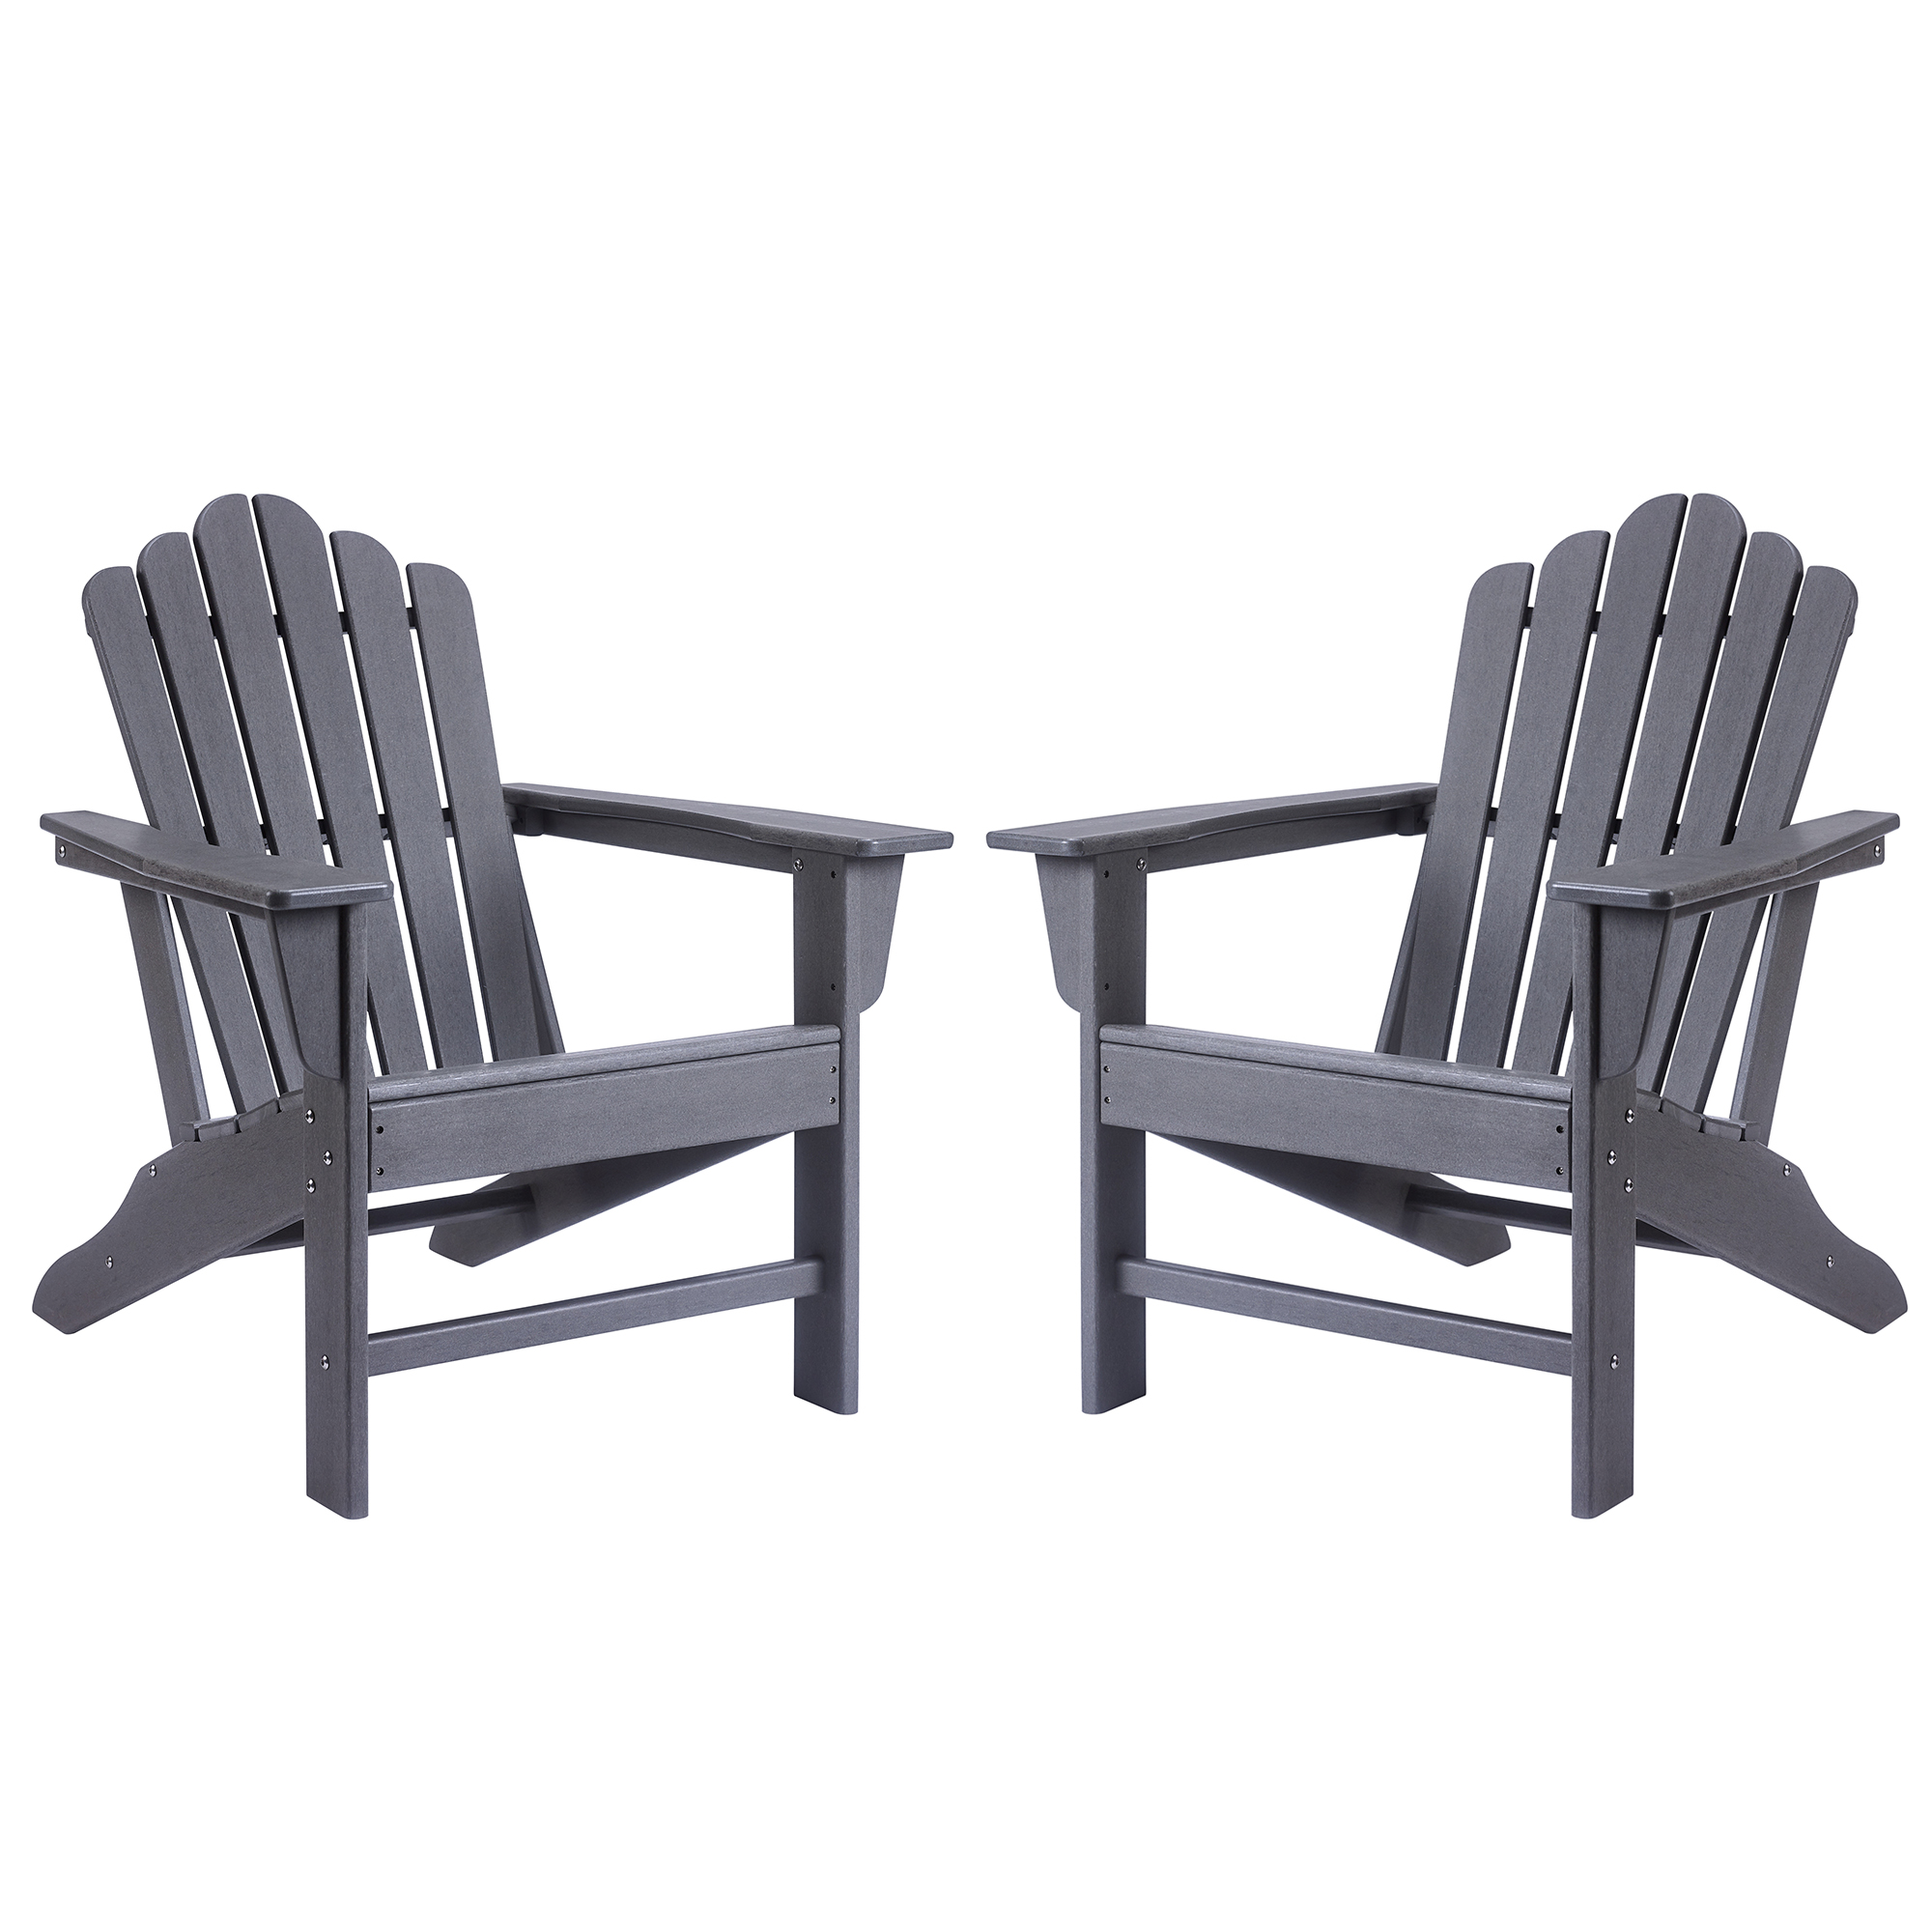 Casainc 2 PCS Classic Outdoor Adirondack Chair for Garden Porch Patio Deck Backyard, Weather Resistant Accent Furniture, Slate Grey-CASAINC